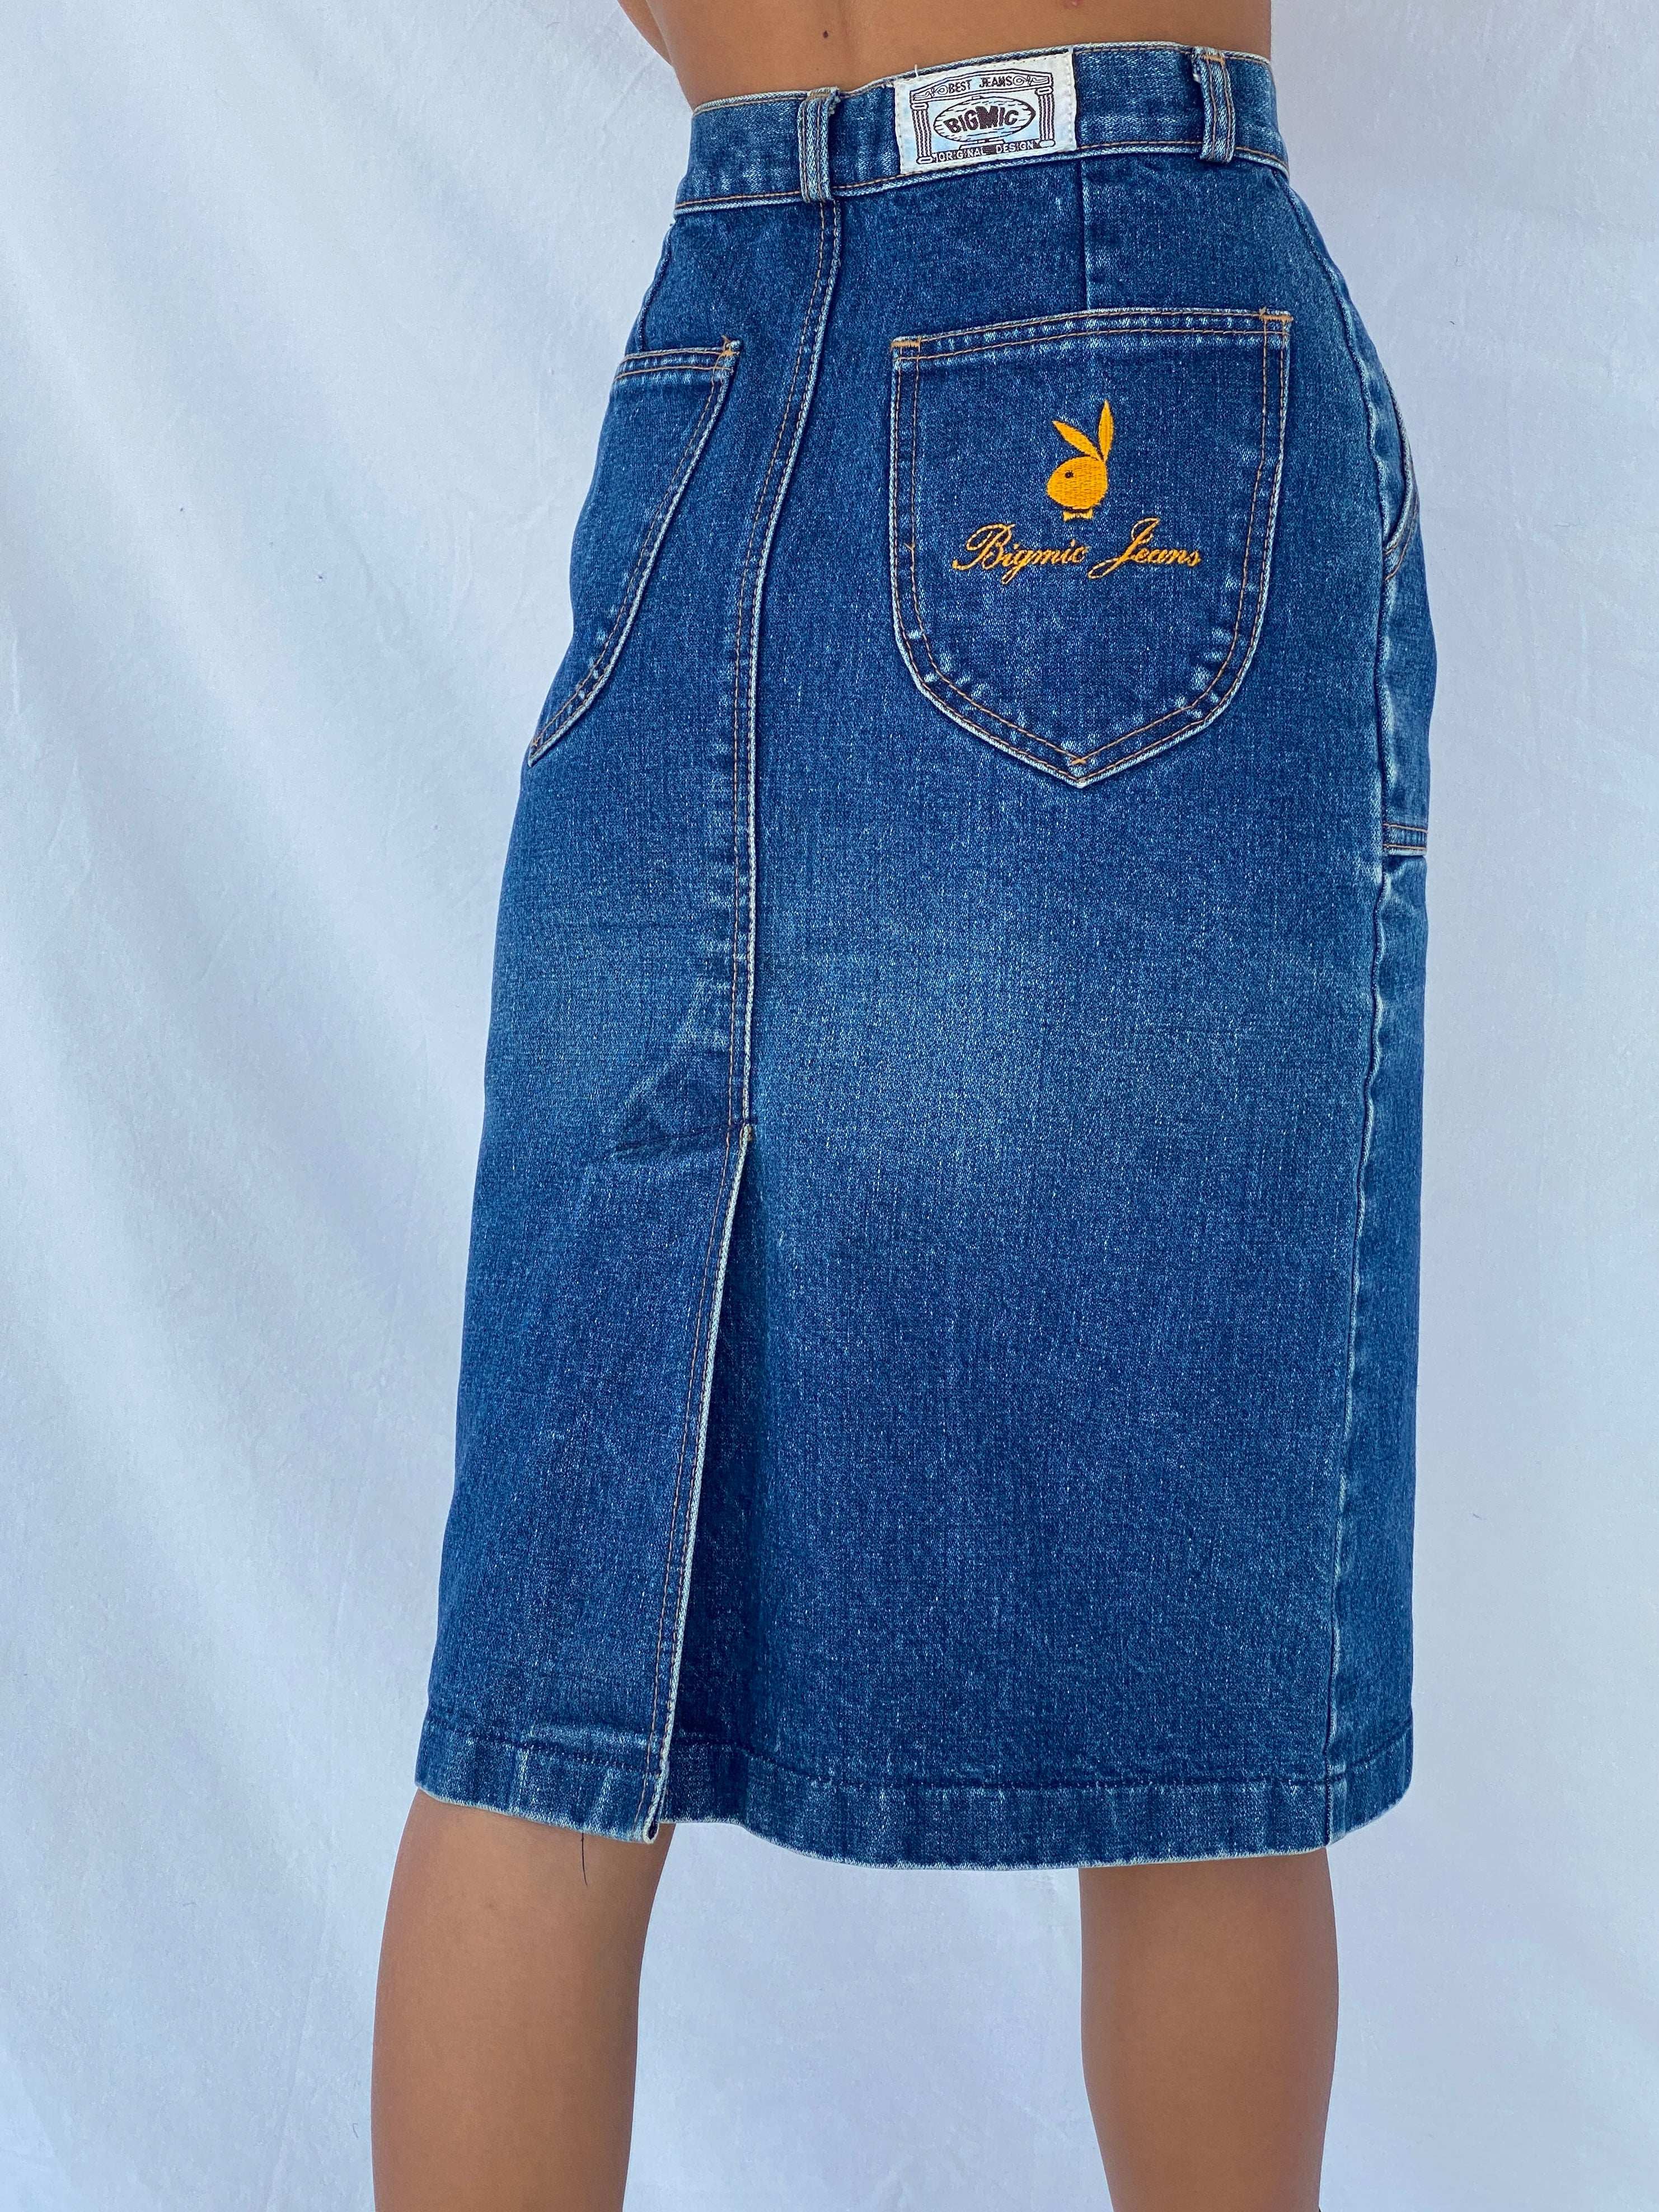 Vintage BIGMIC Jeans Midi Denim Pencil Skirt - Balagan Vintage Midi Skirt 00s, denim skirt, midi skirt, Tojan